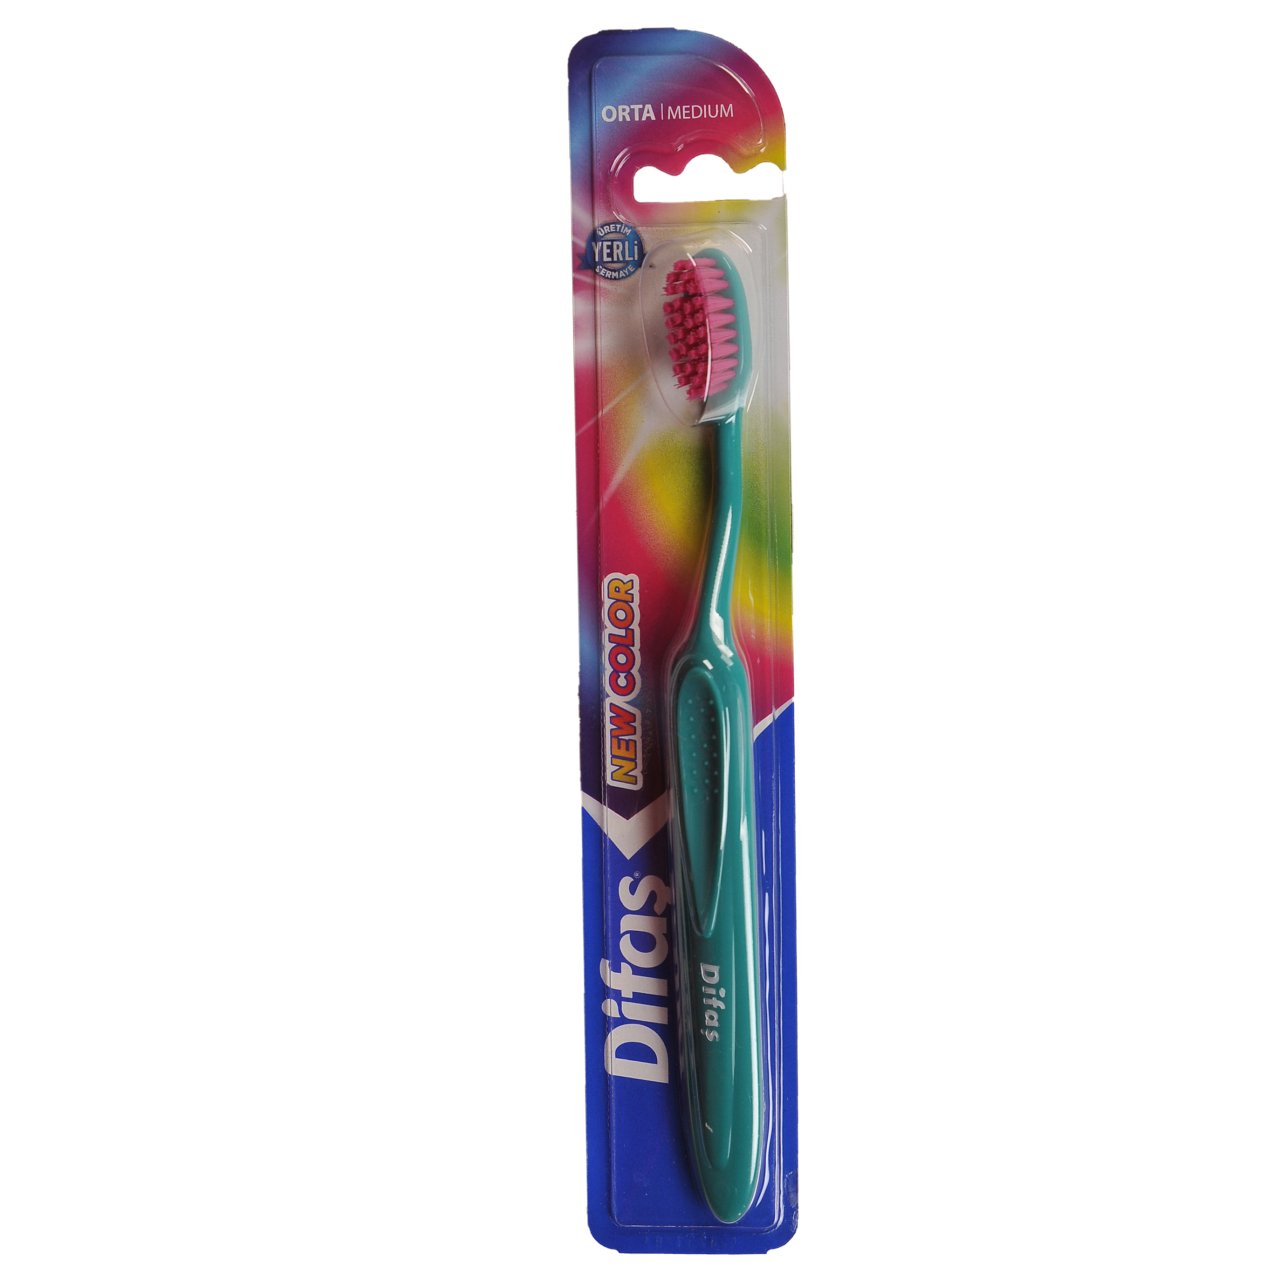 Difaş New Color Orta / Medıum Diş Fırçası